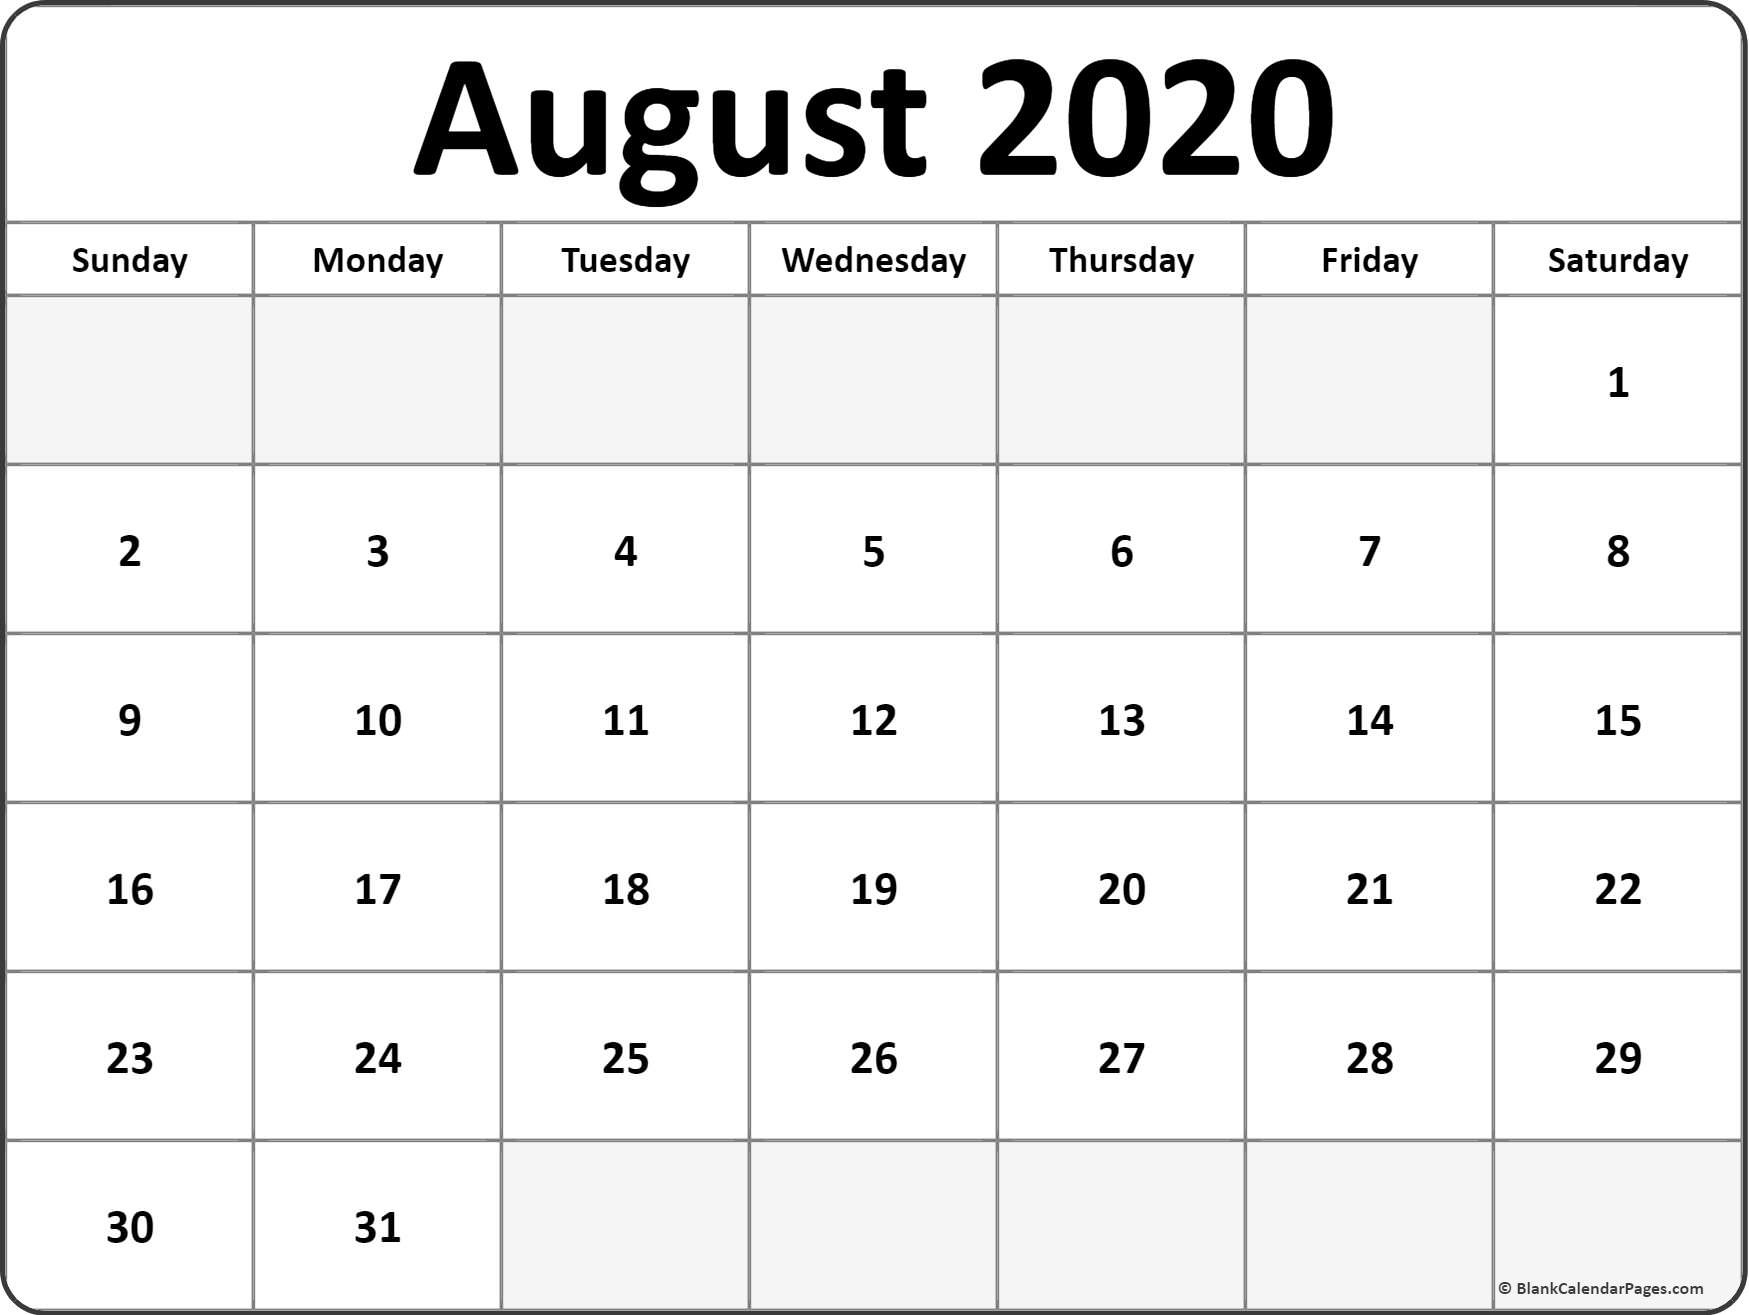 August 2020 Calendar | Free Printable Monthly Calendars-Aug Monthly Calendar 2020